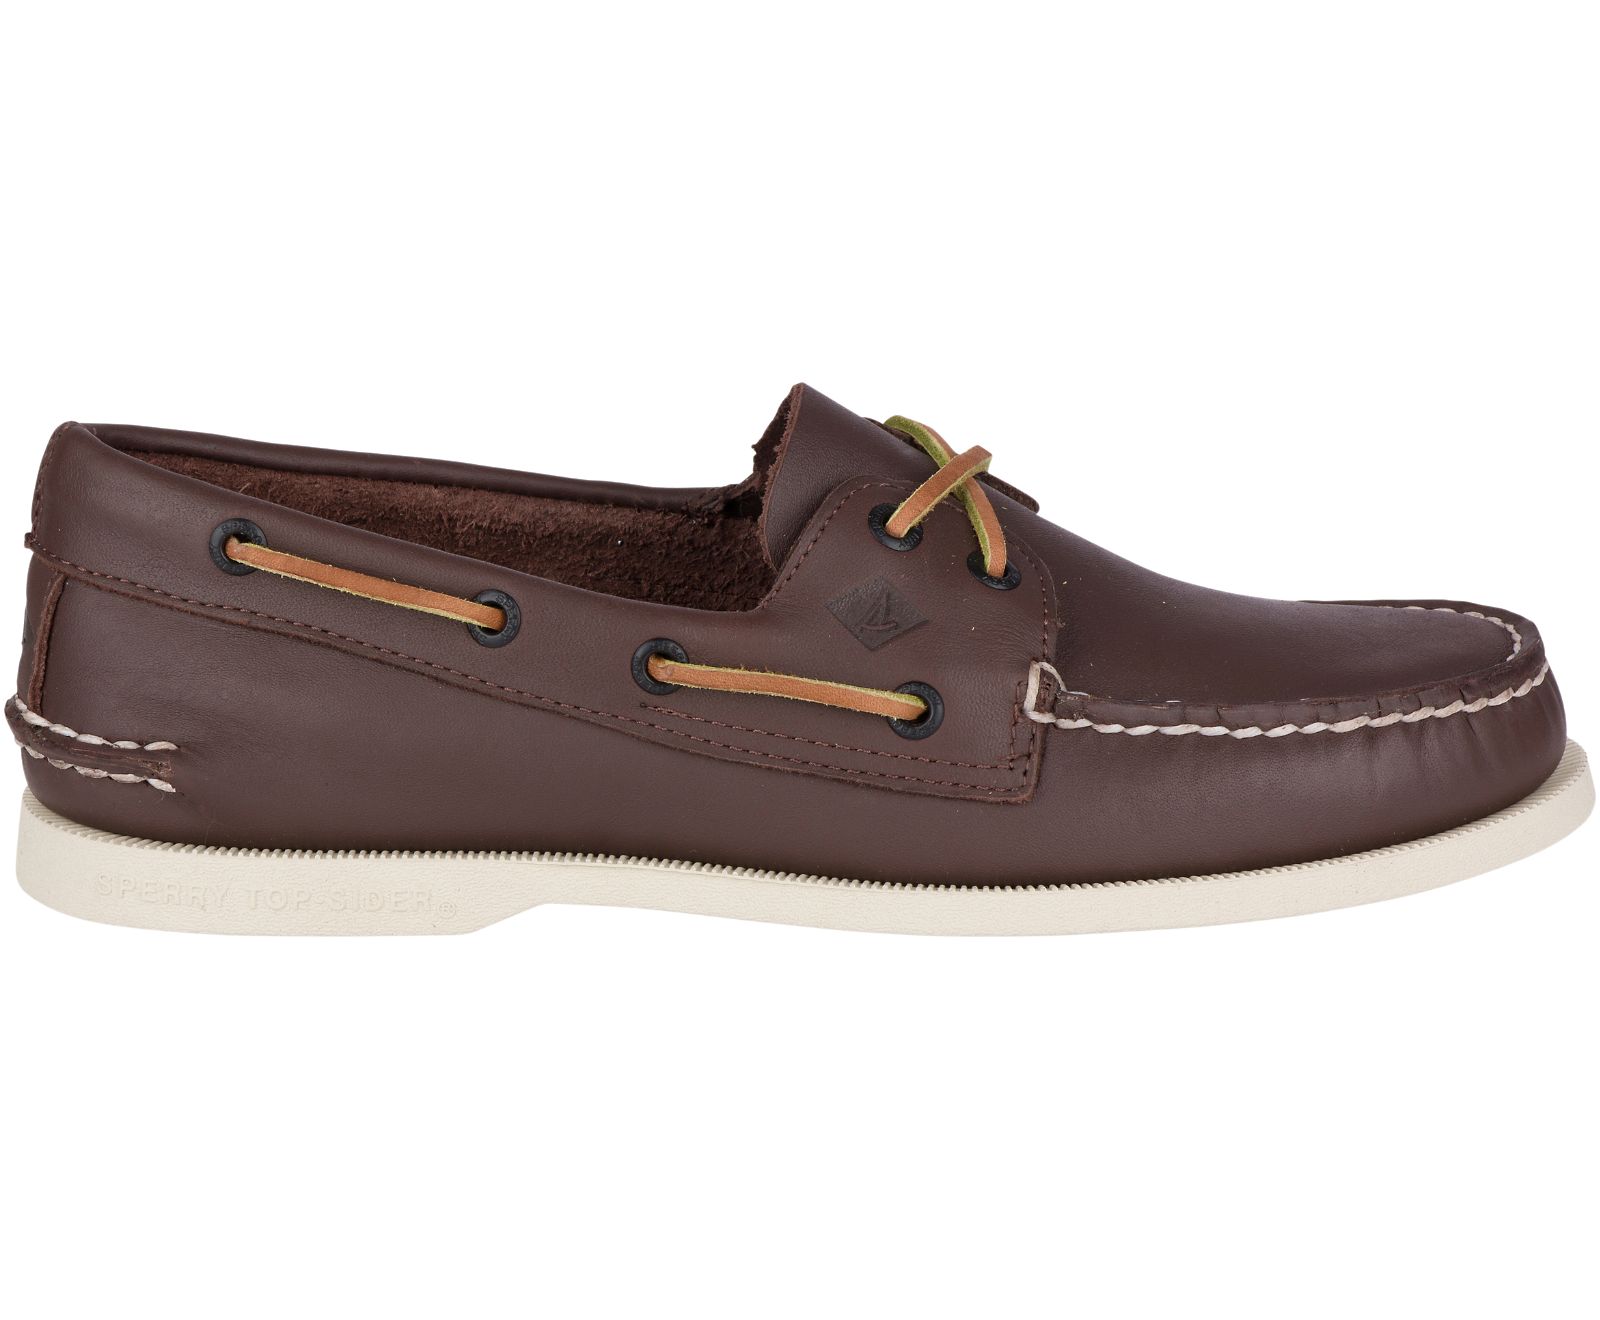 Men's Authentic Original Leather Boat Shoe - Classic Brown - Click Image to Close